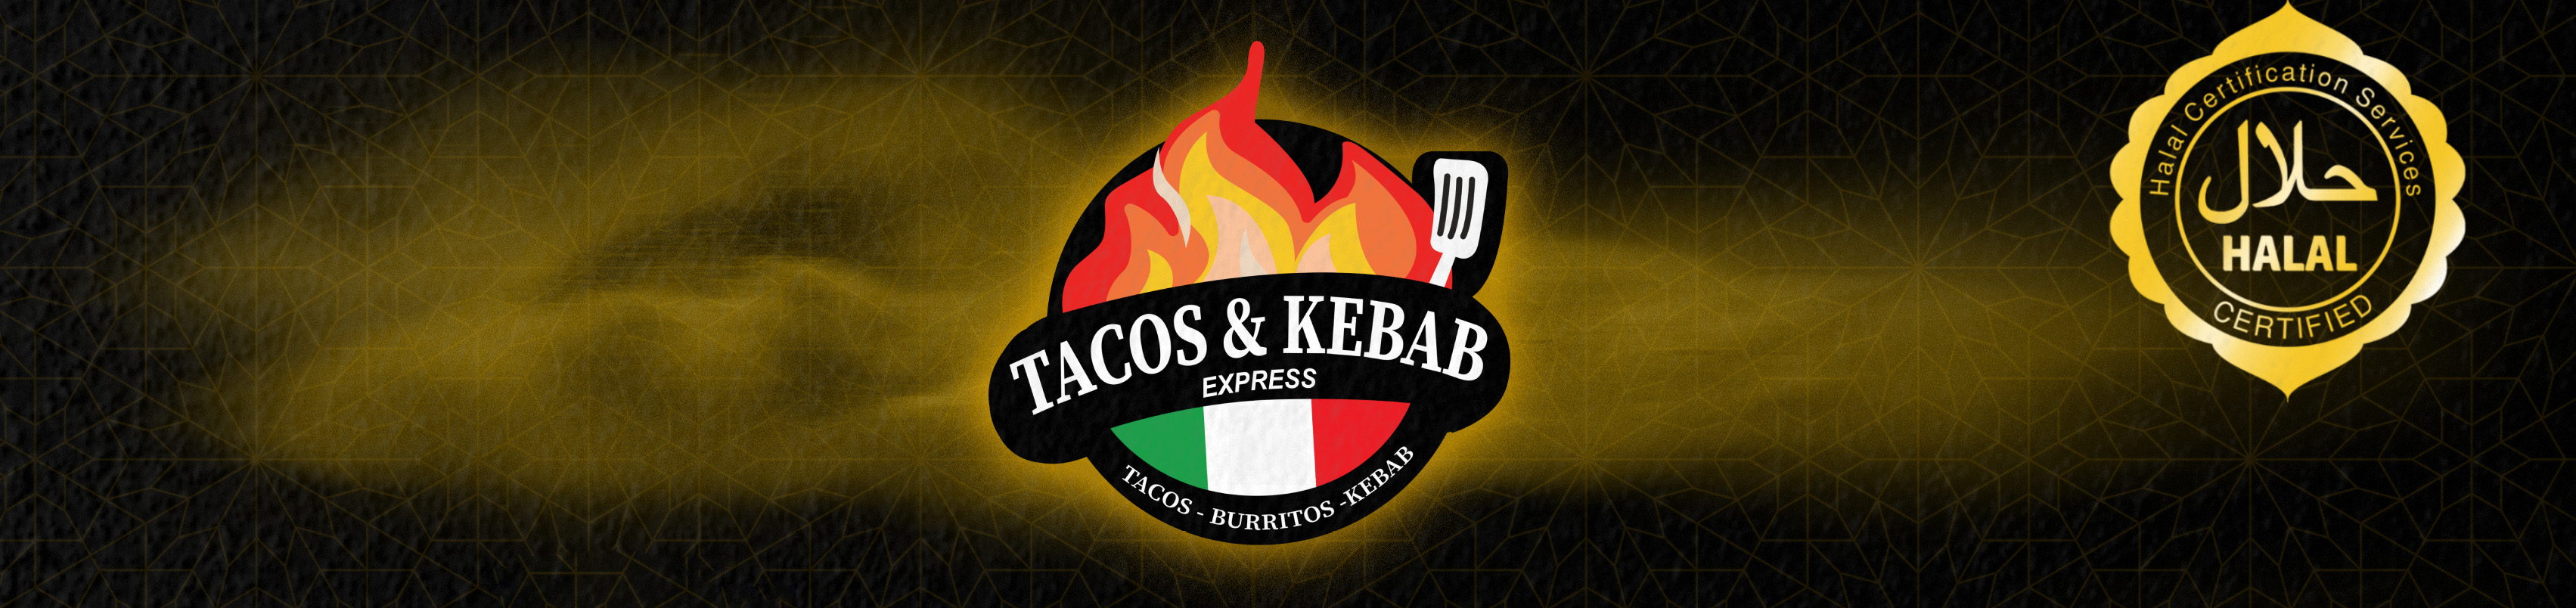 Banner Tacos& kebab